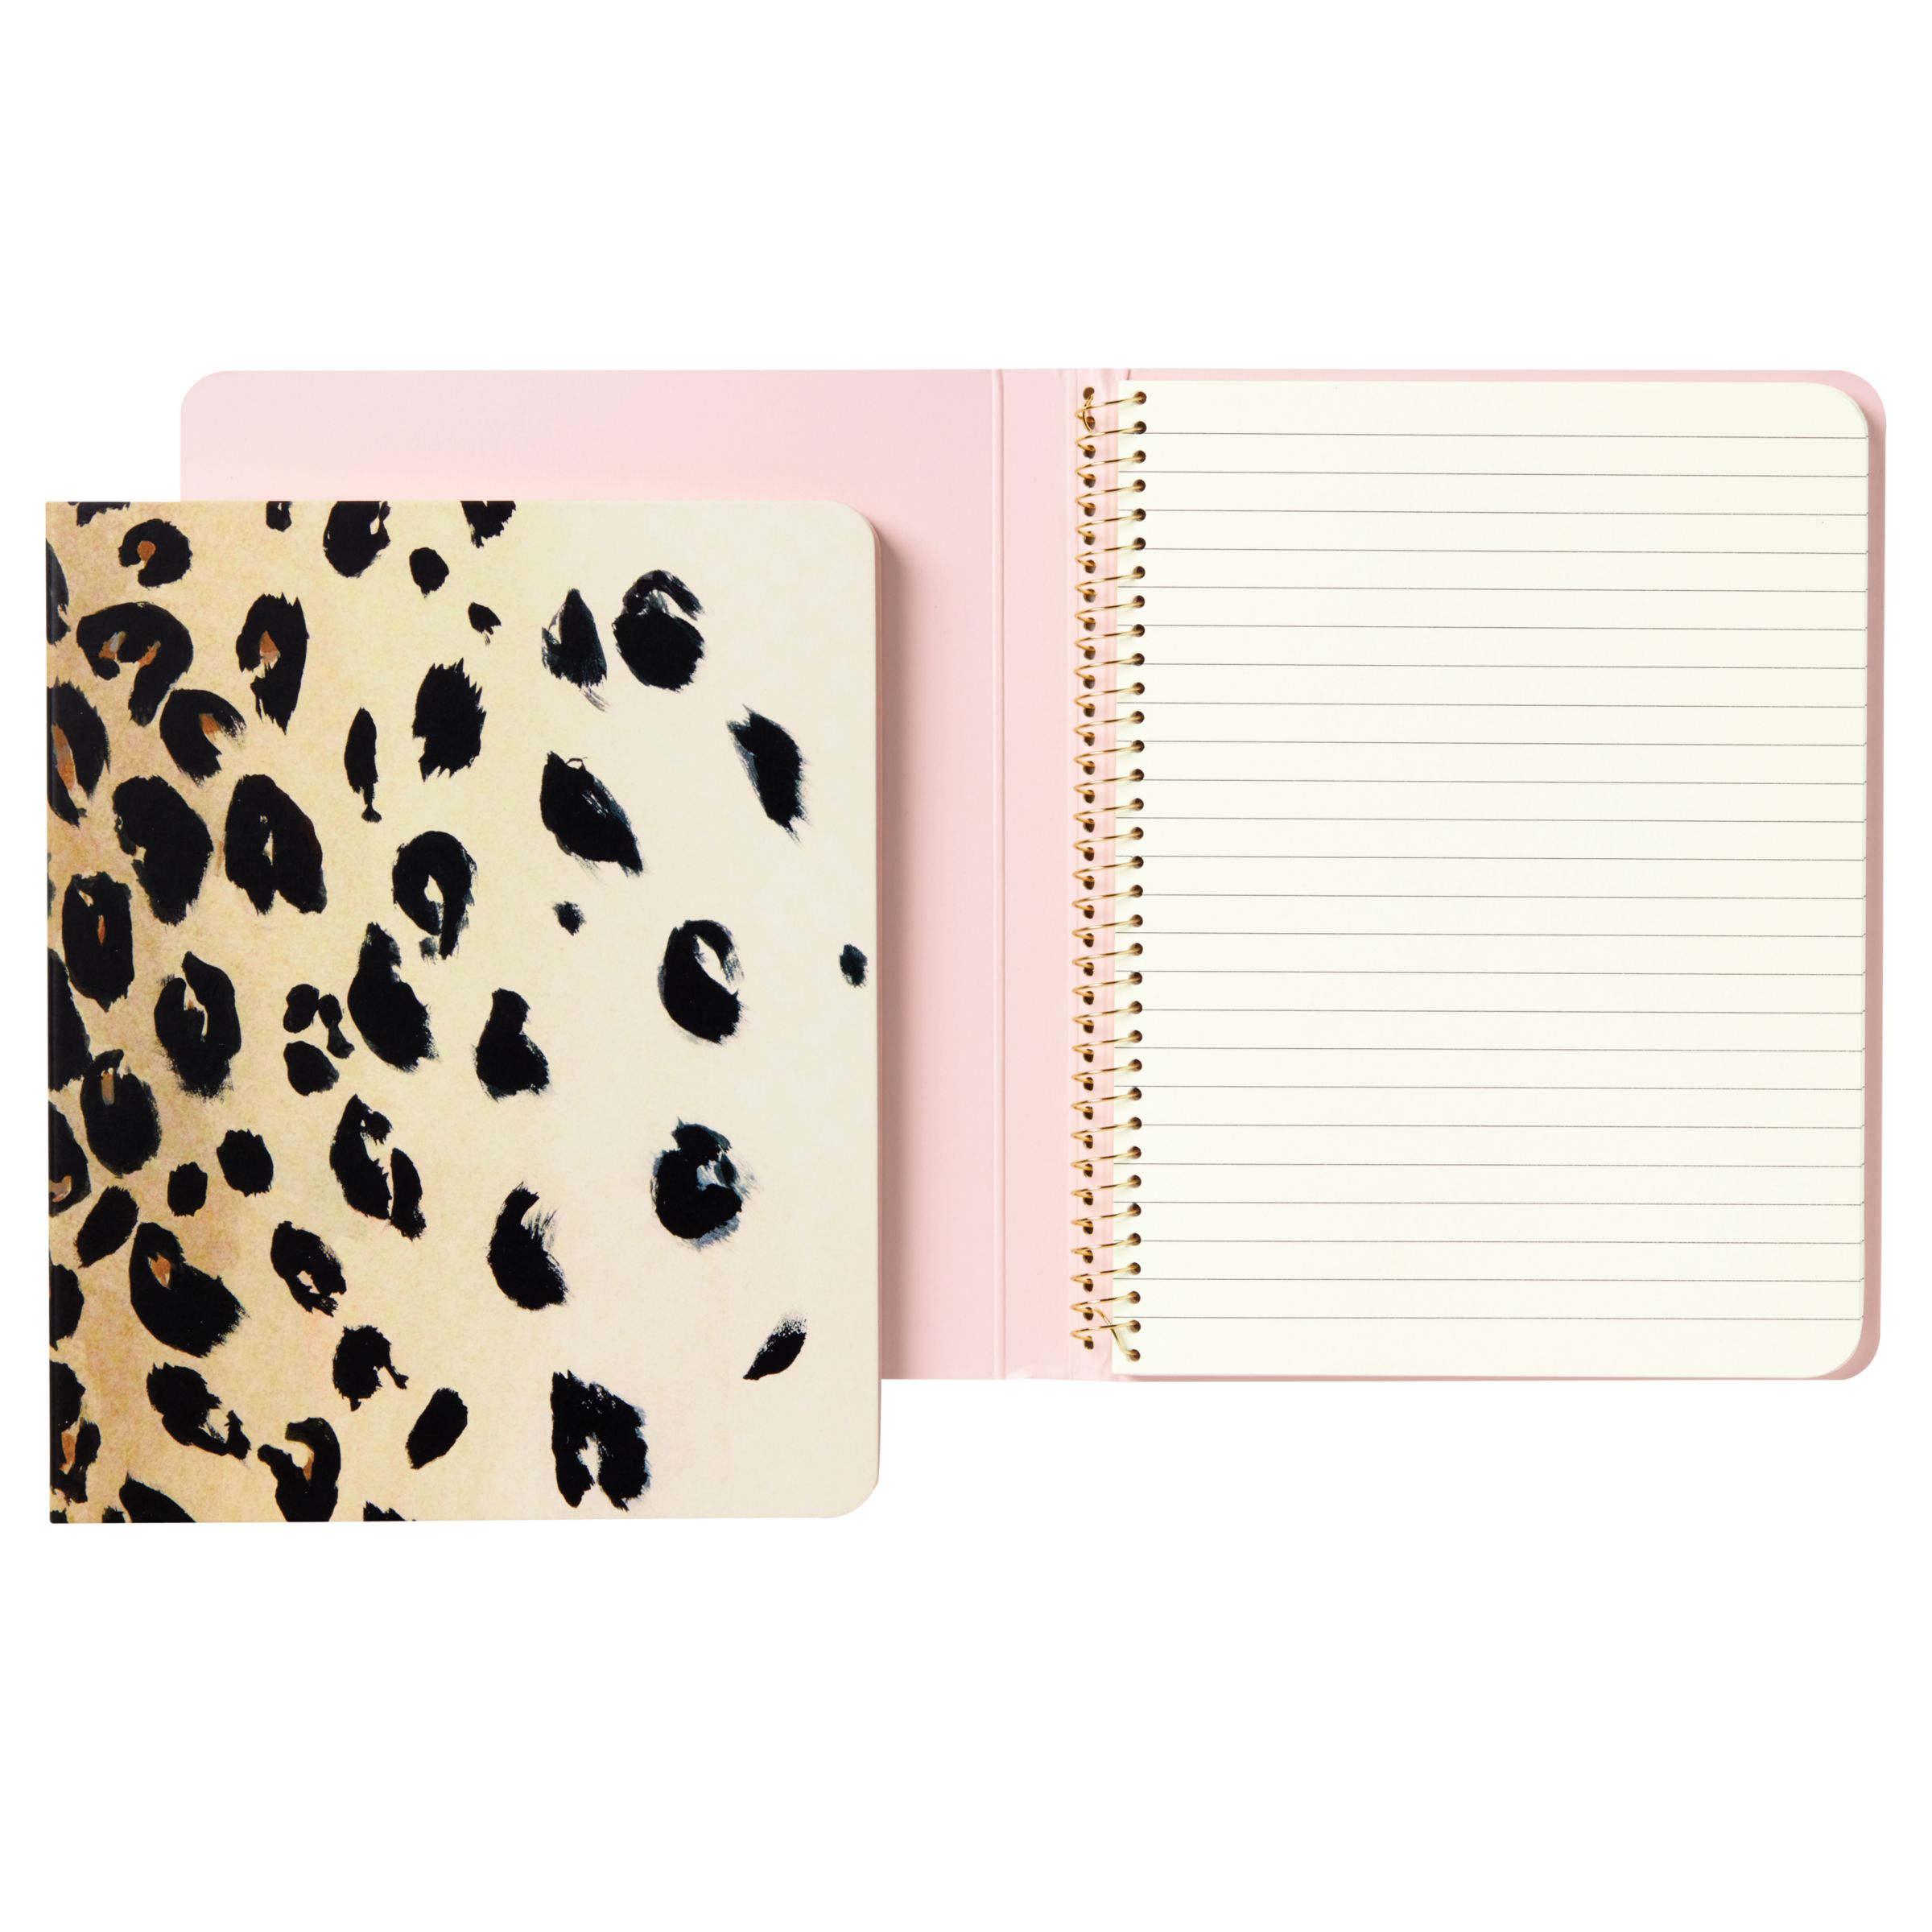 Arriba 72+ imagen kate spade leopard notebook